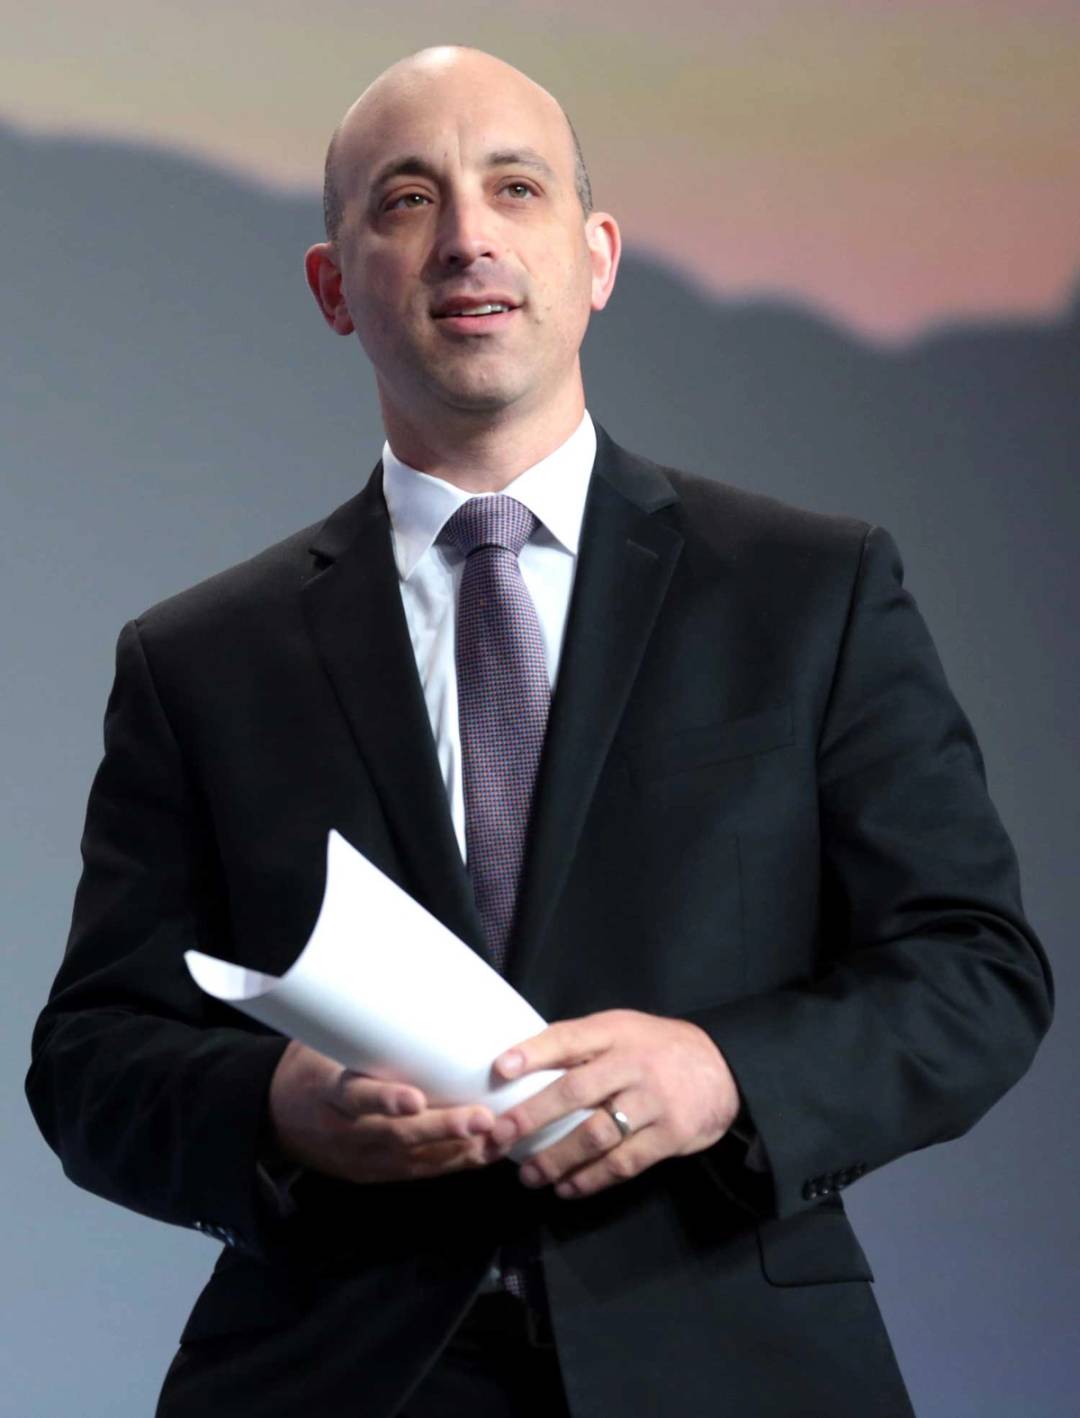 ADL national director and CEO Jonathan Greenblatt